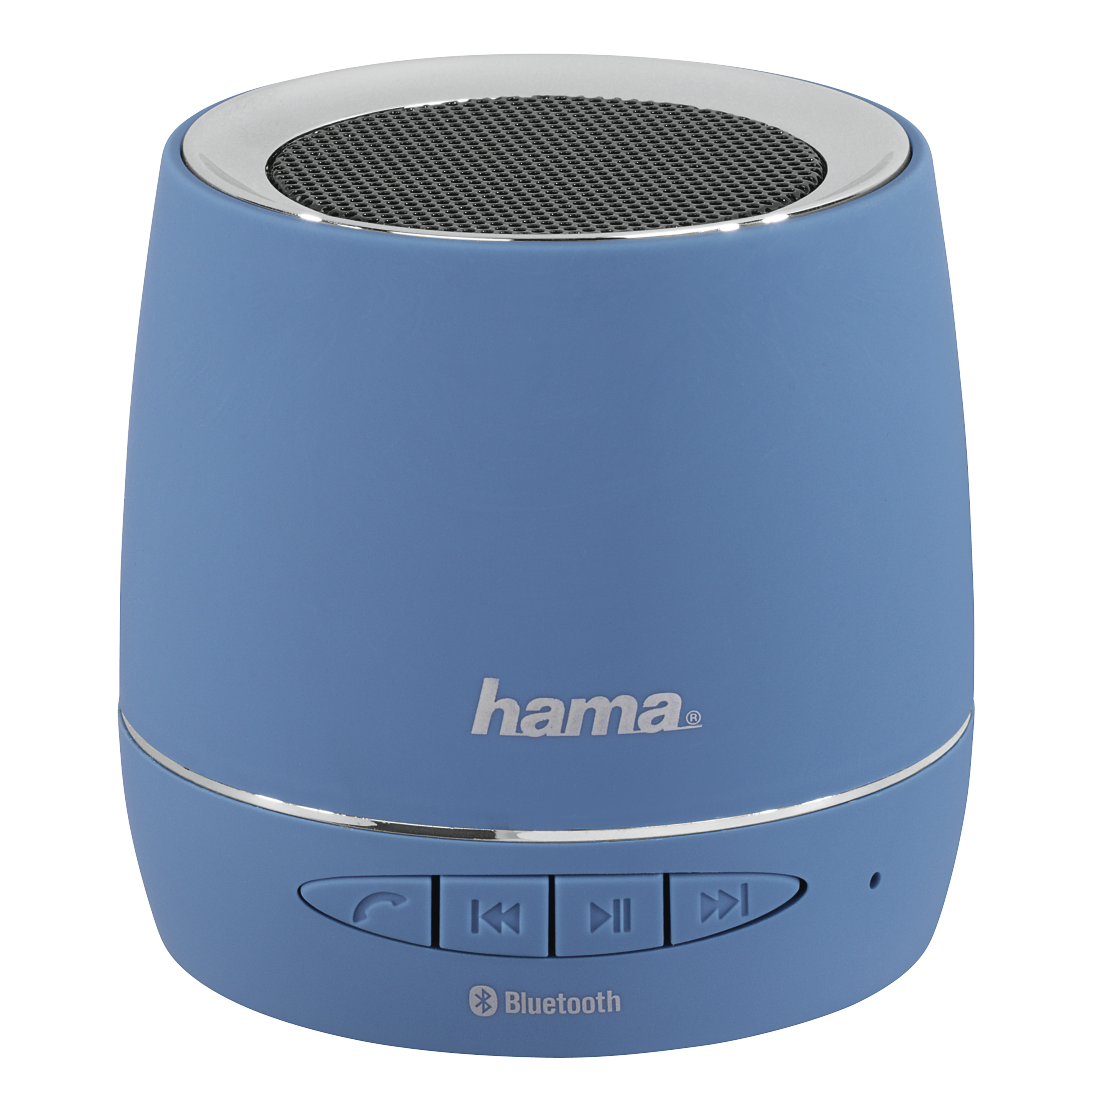 00173127 Hama Mobile Bluetooth® Speaker, matt blue | hama.com